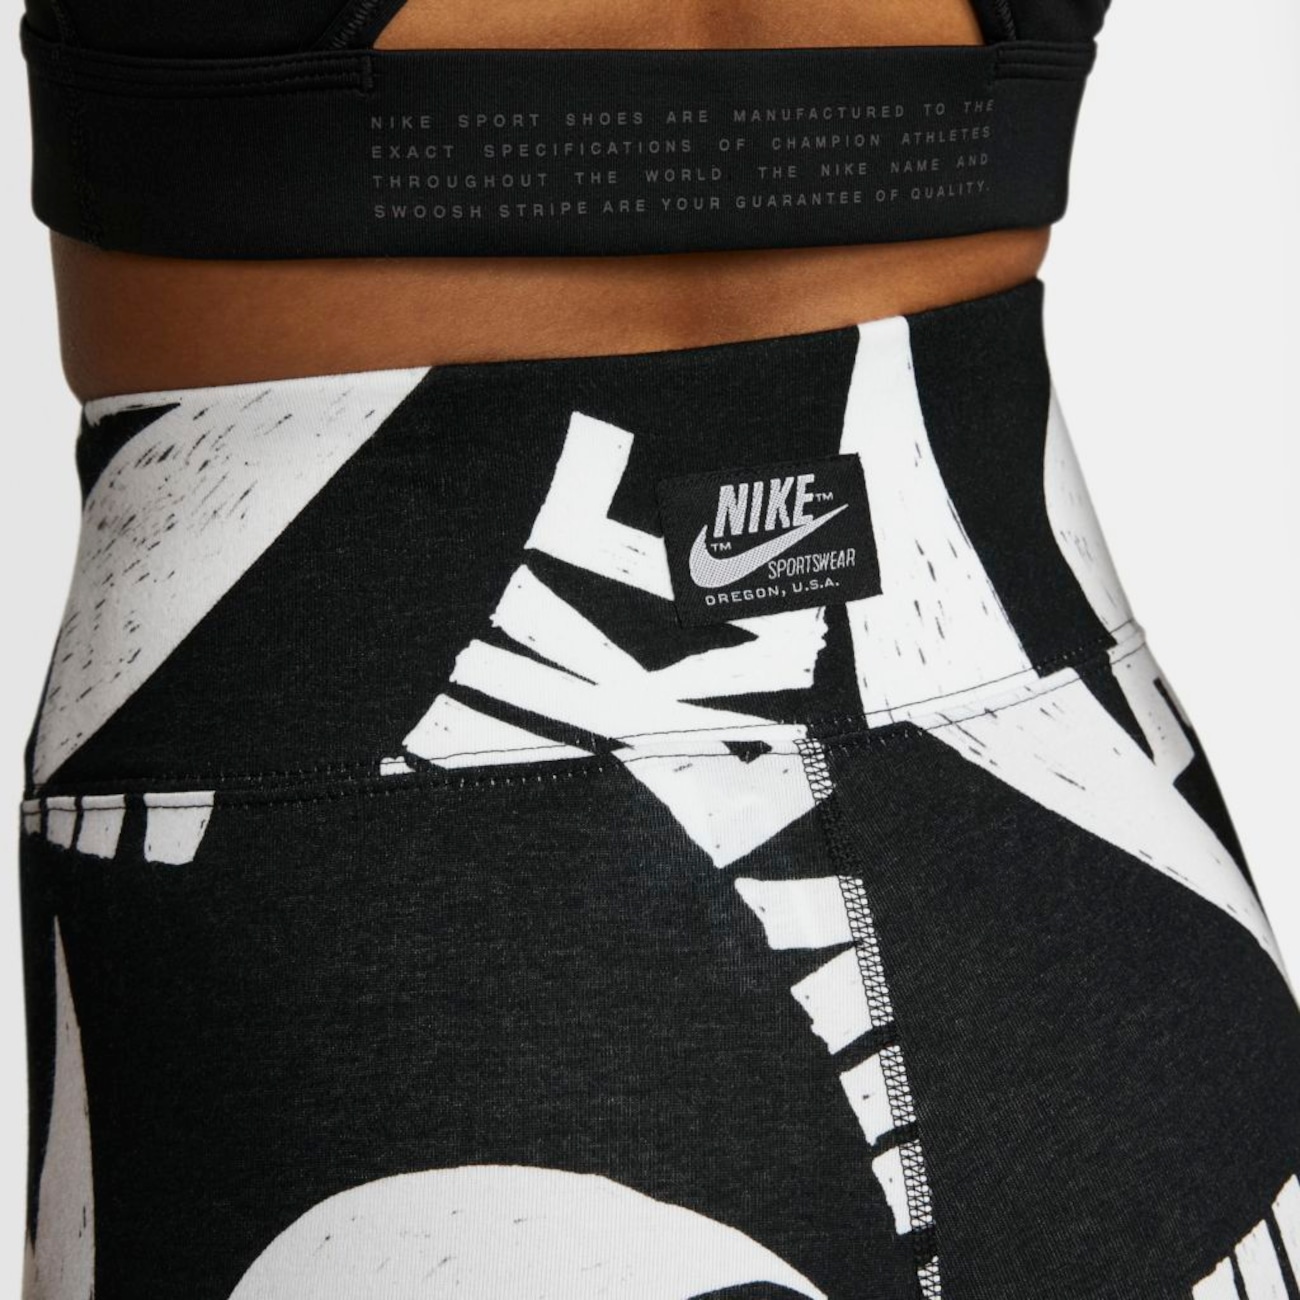 Legging Nike Sportswear Feminina - Nike